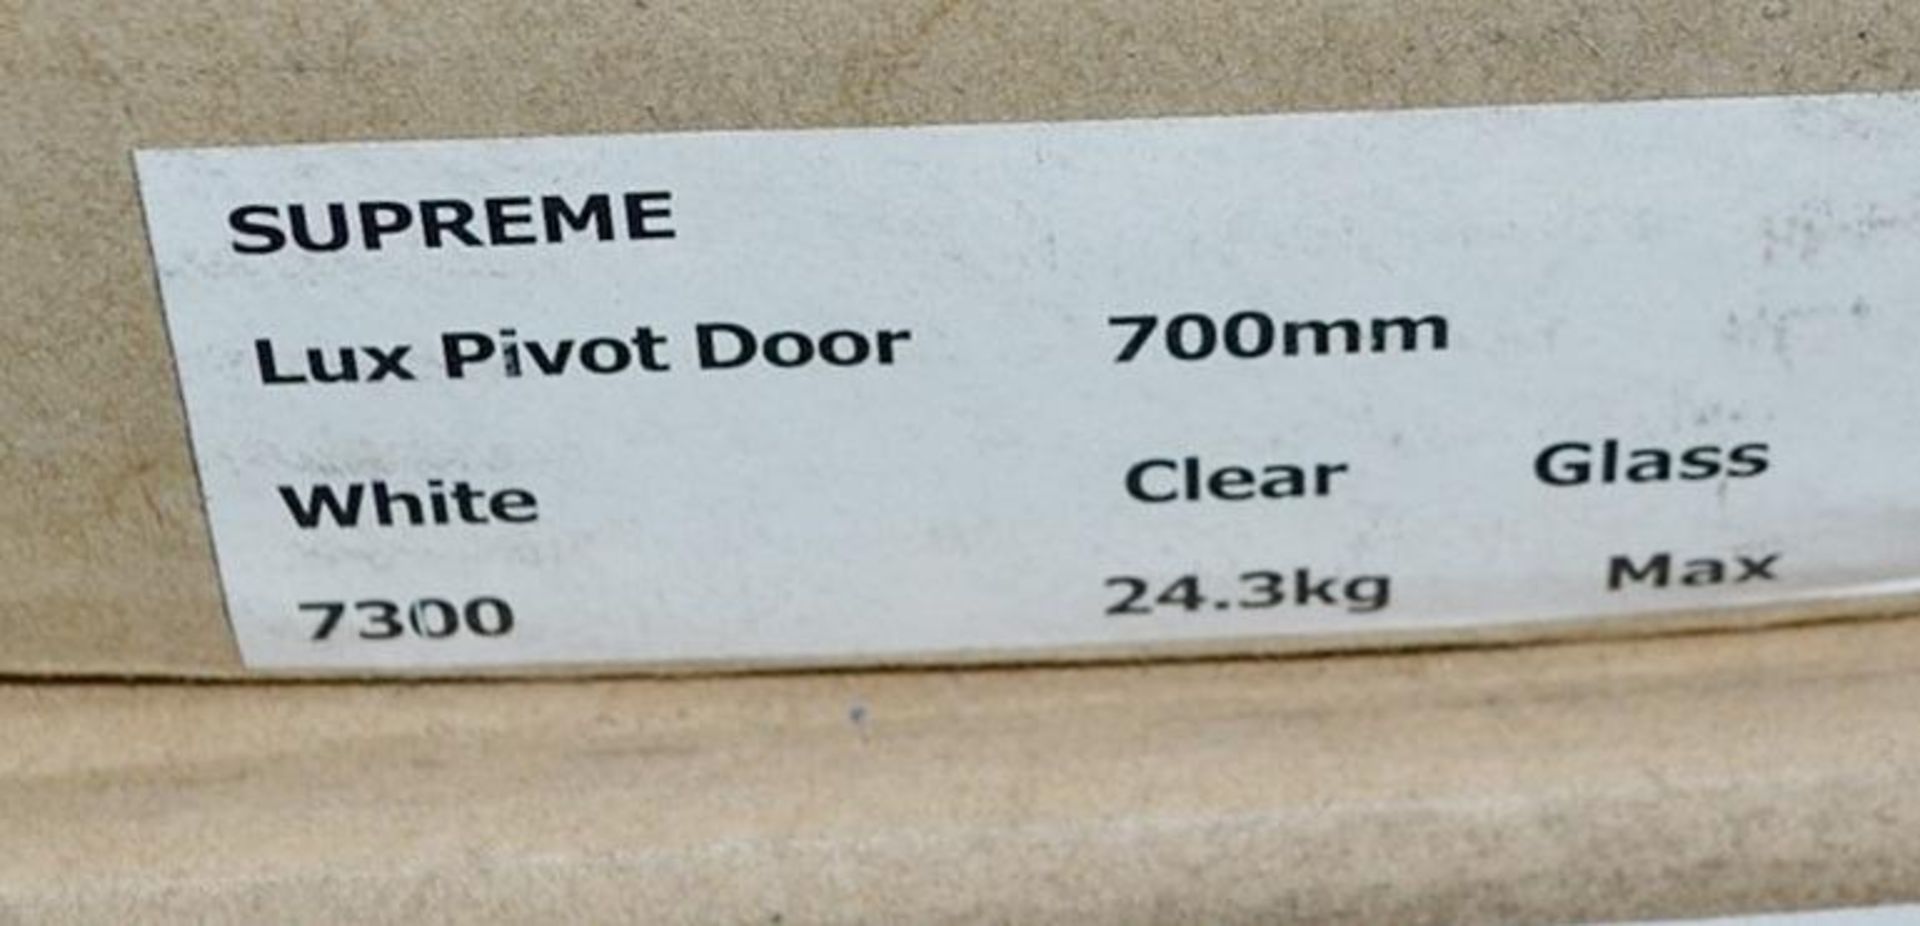 1 x Simpsons Supreme Semi Frameless Luxury Pivot Shower Door - 700mm - Ref: 7300 - Powershower Proof - Image 2 of 2